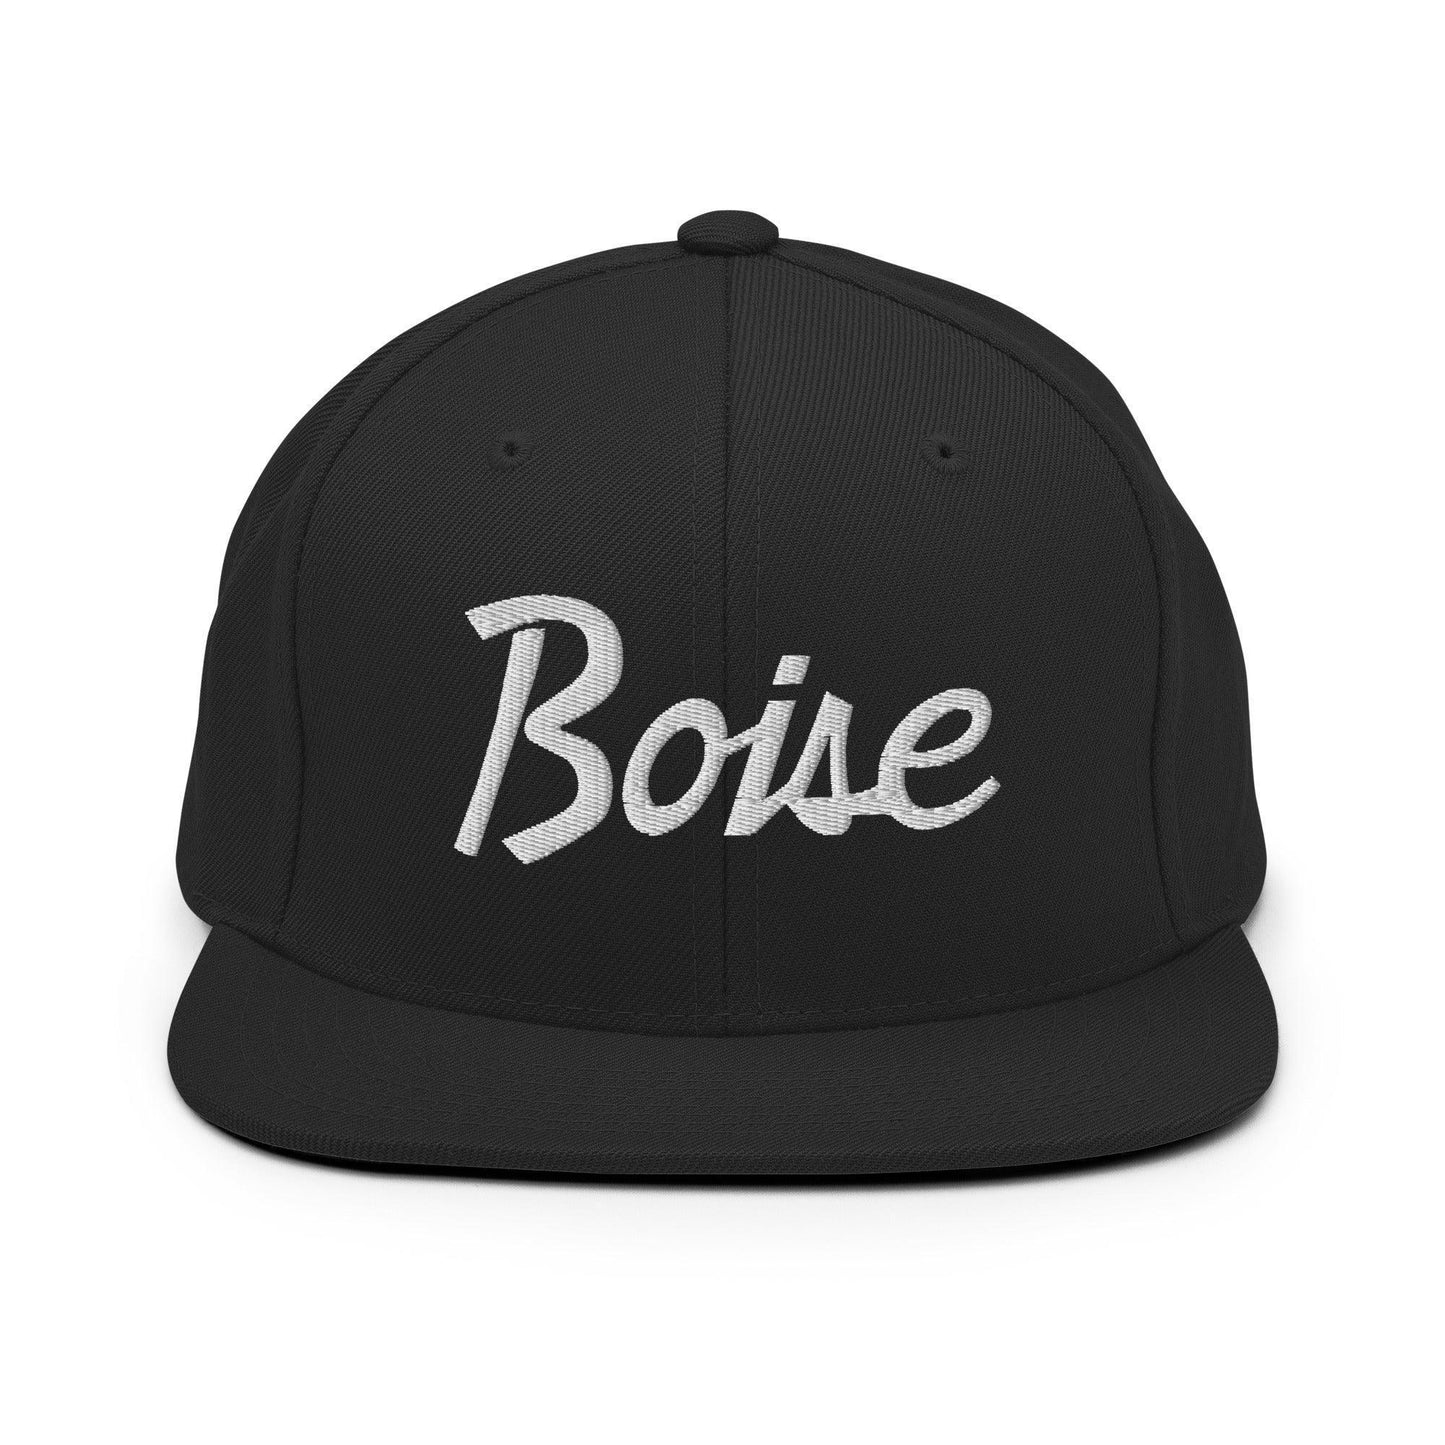 Boise Script Snapback Hat Black